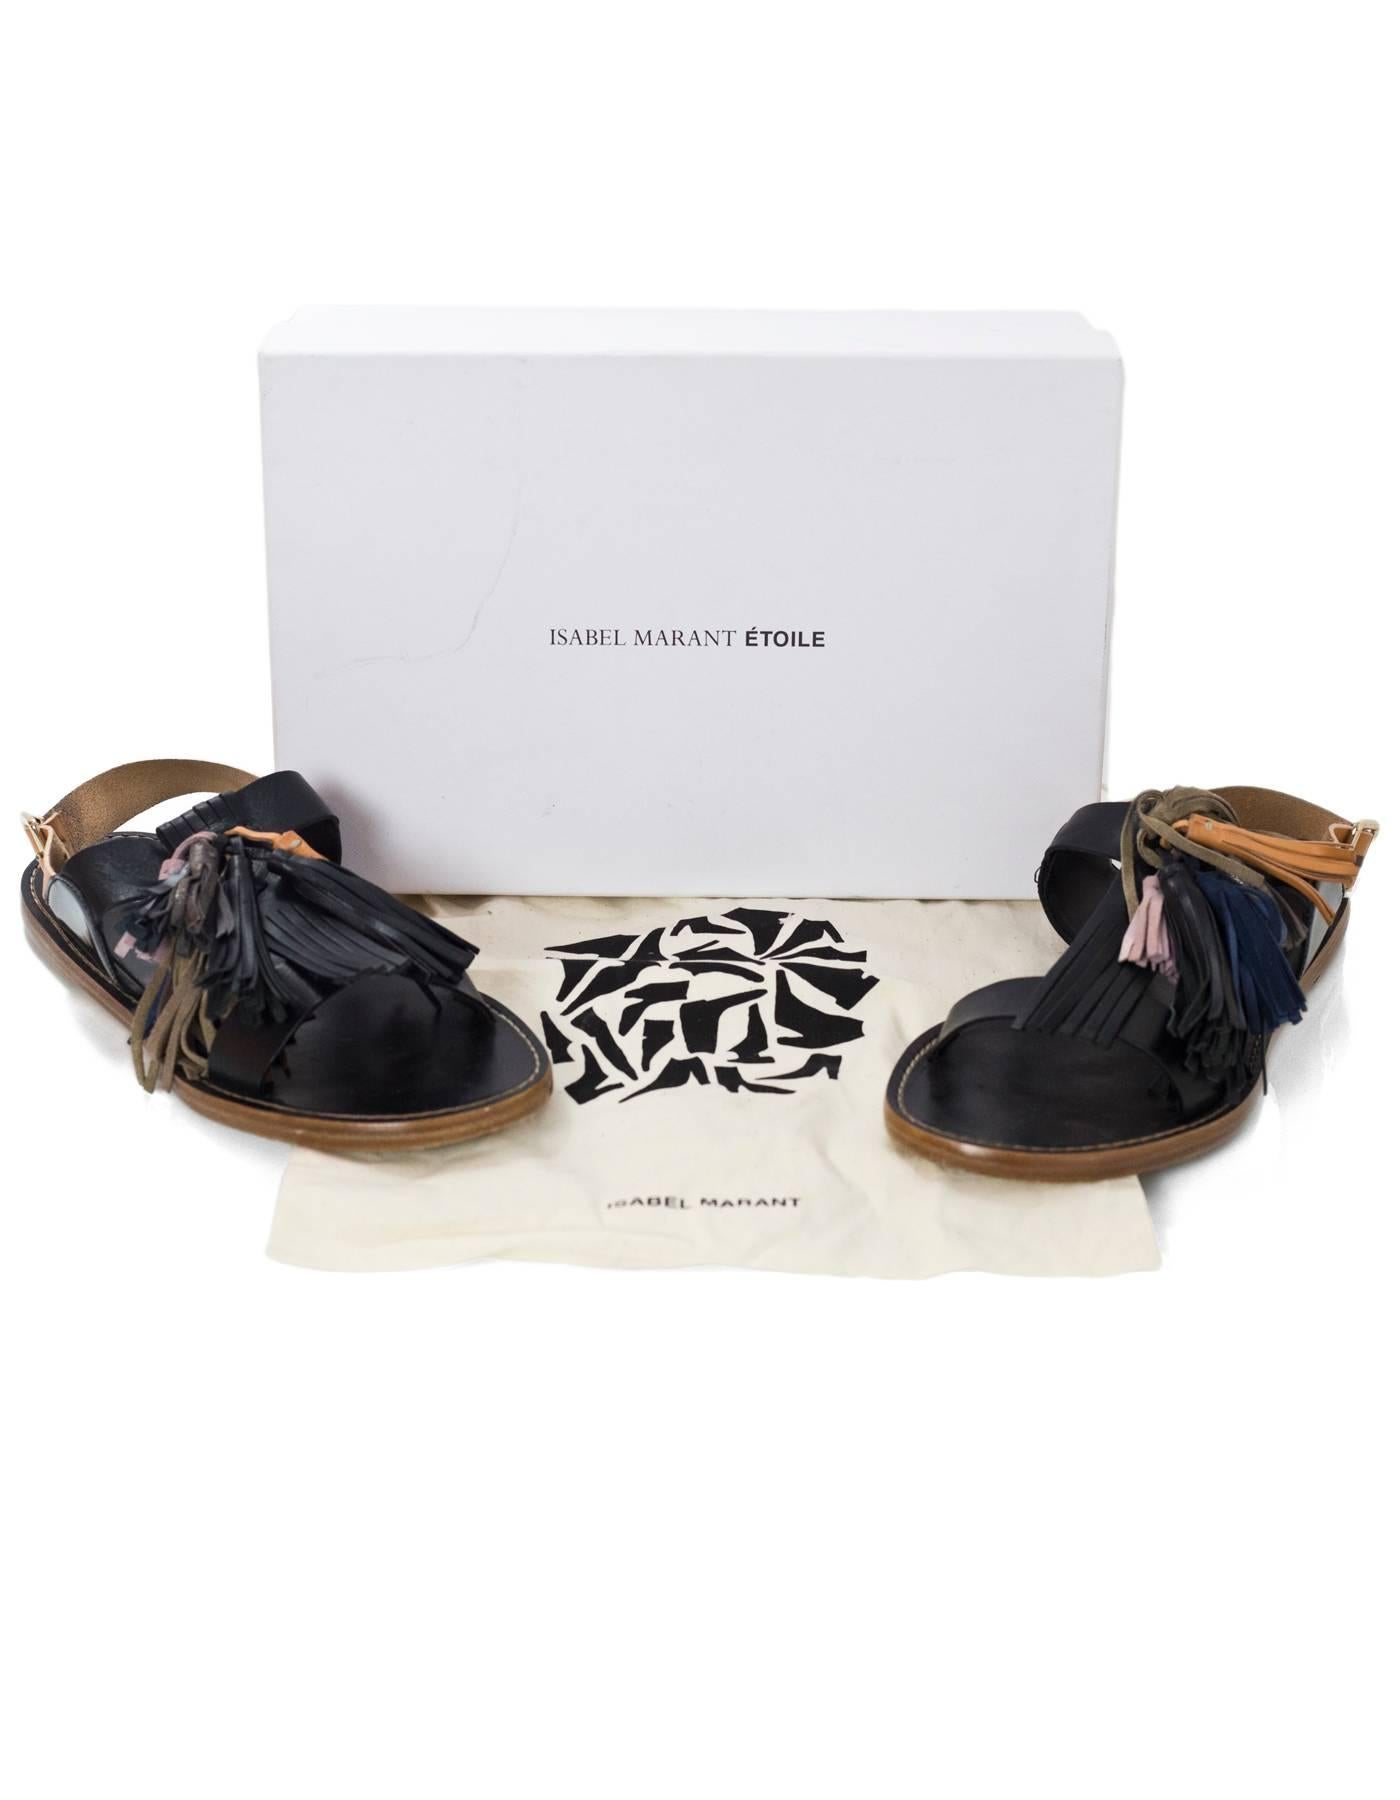 Etoile Isabel Marant Black & Multi Color Pompons Tassel Sandals Sz 41 with  2